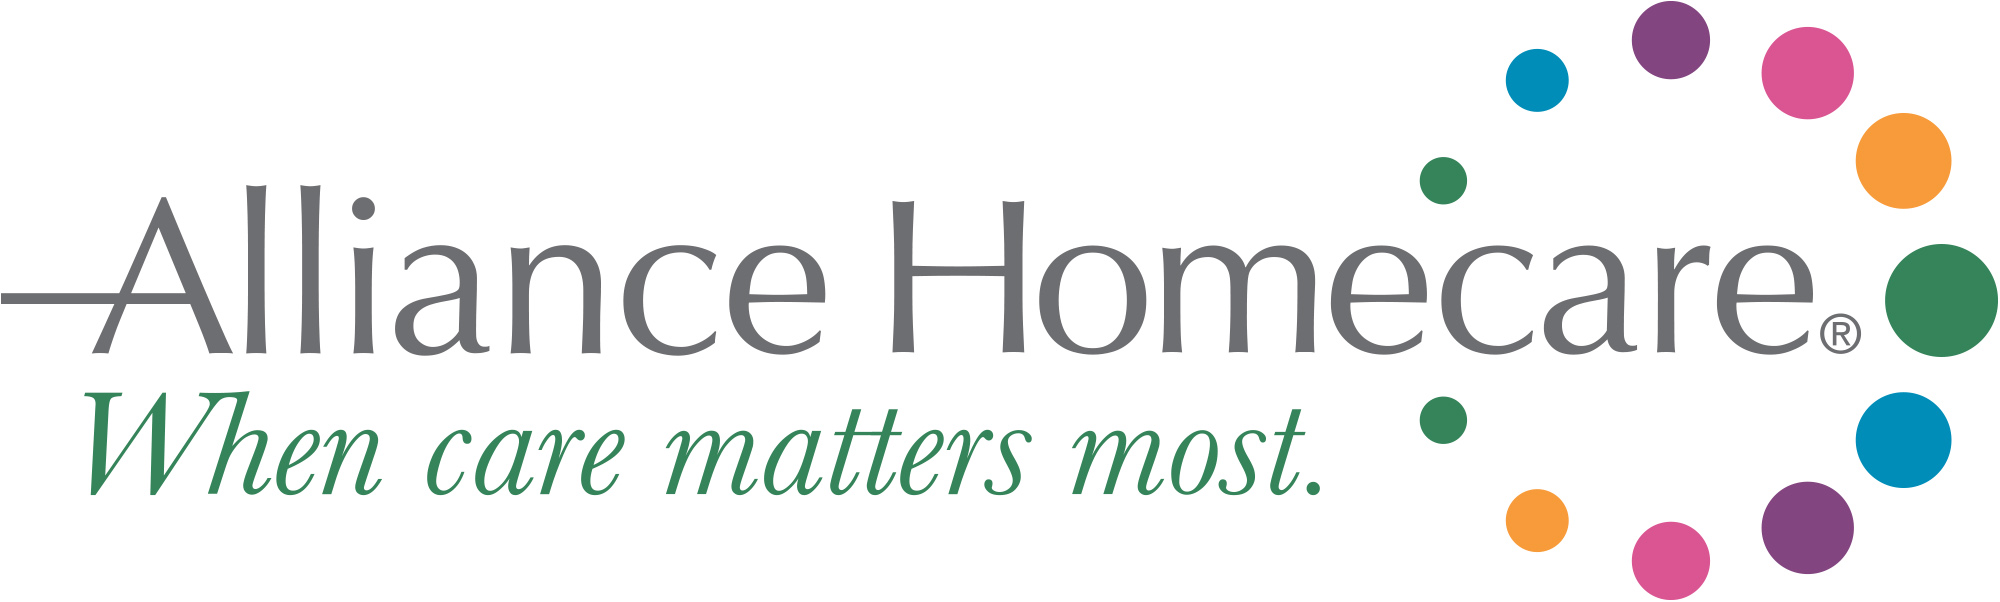 05. Alliance Homecare (Comfort Zone)